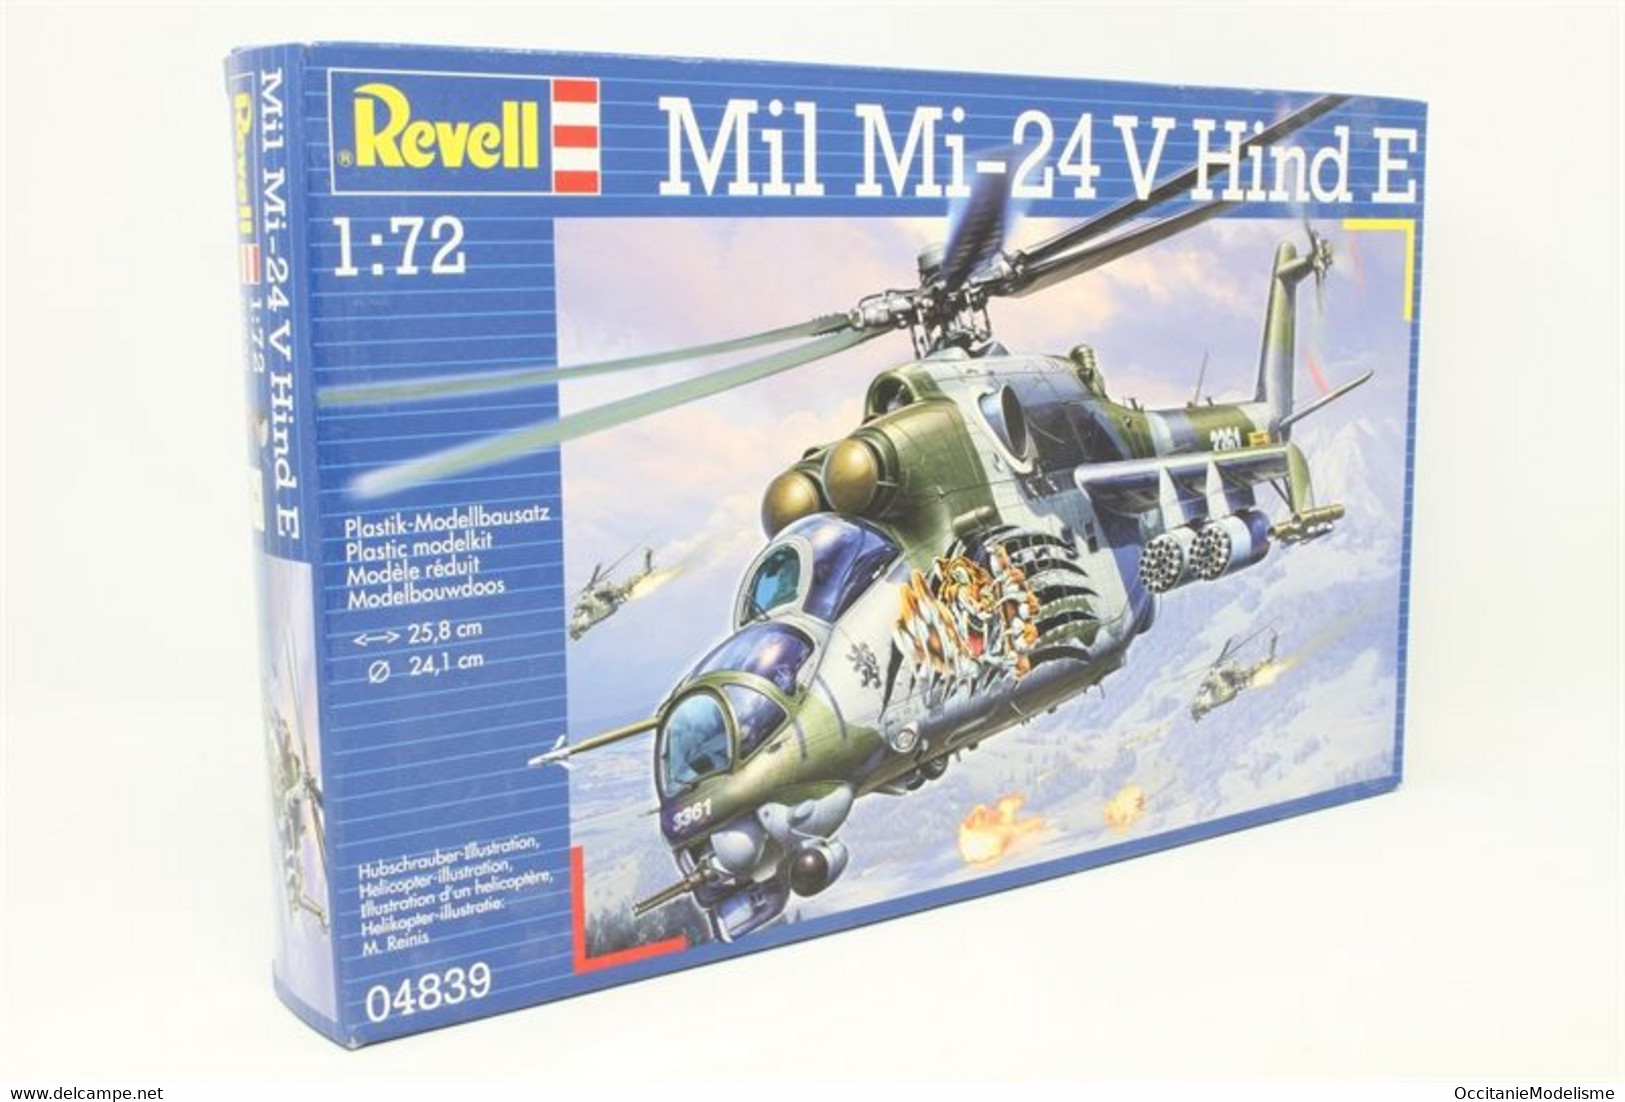 Revell - MIL Mi-24 V Hind E Maquette Hélicoptère Kit Plastique Réf. 04839 Neuf NBO 1/72 - Helicópteros